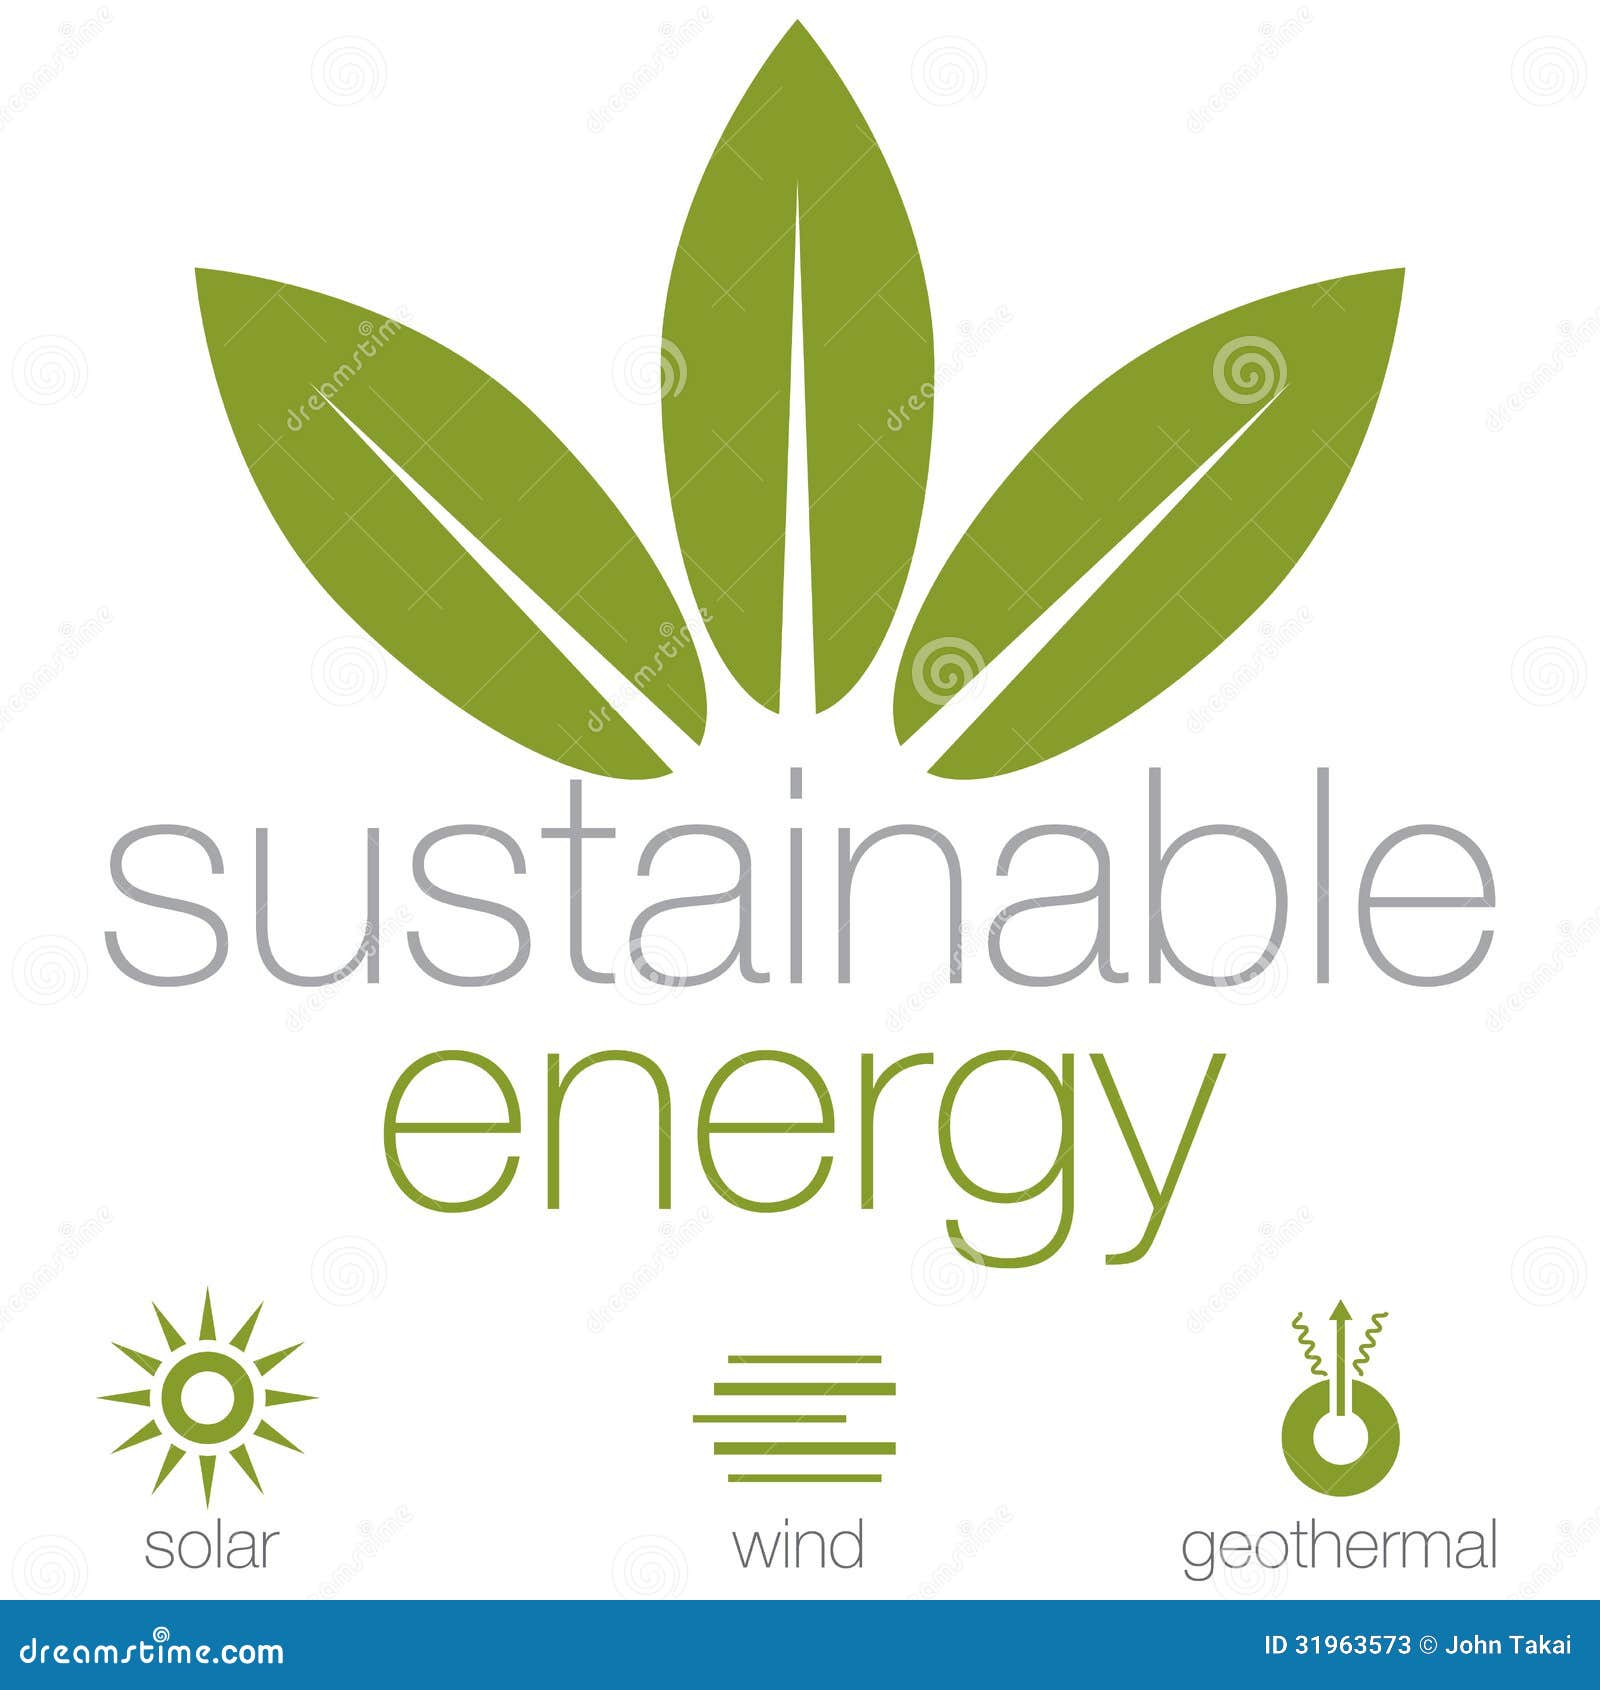 Sustainable Energy Stock Photos - Image: 31963573